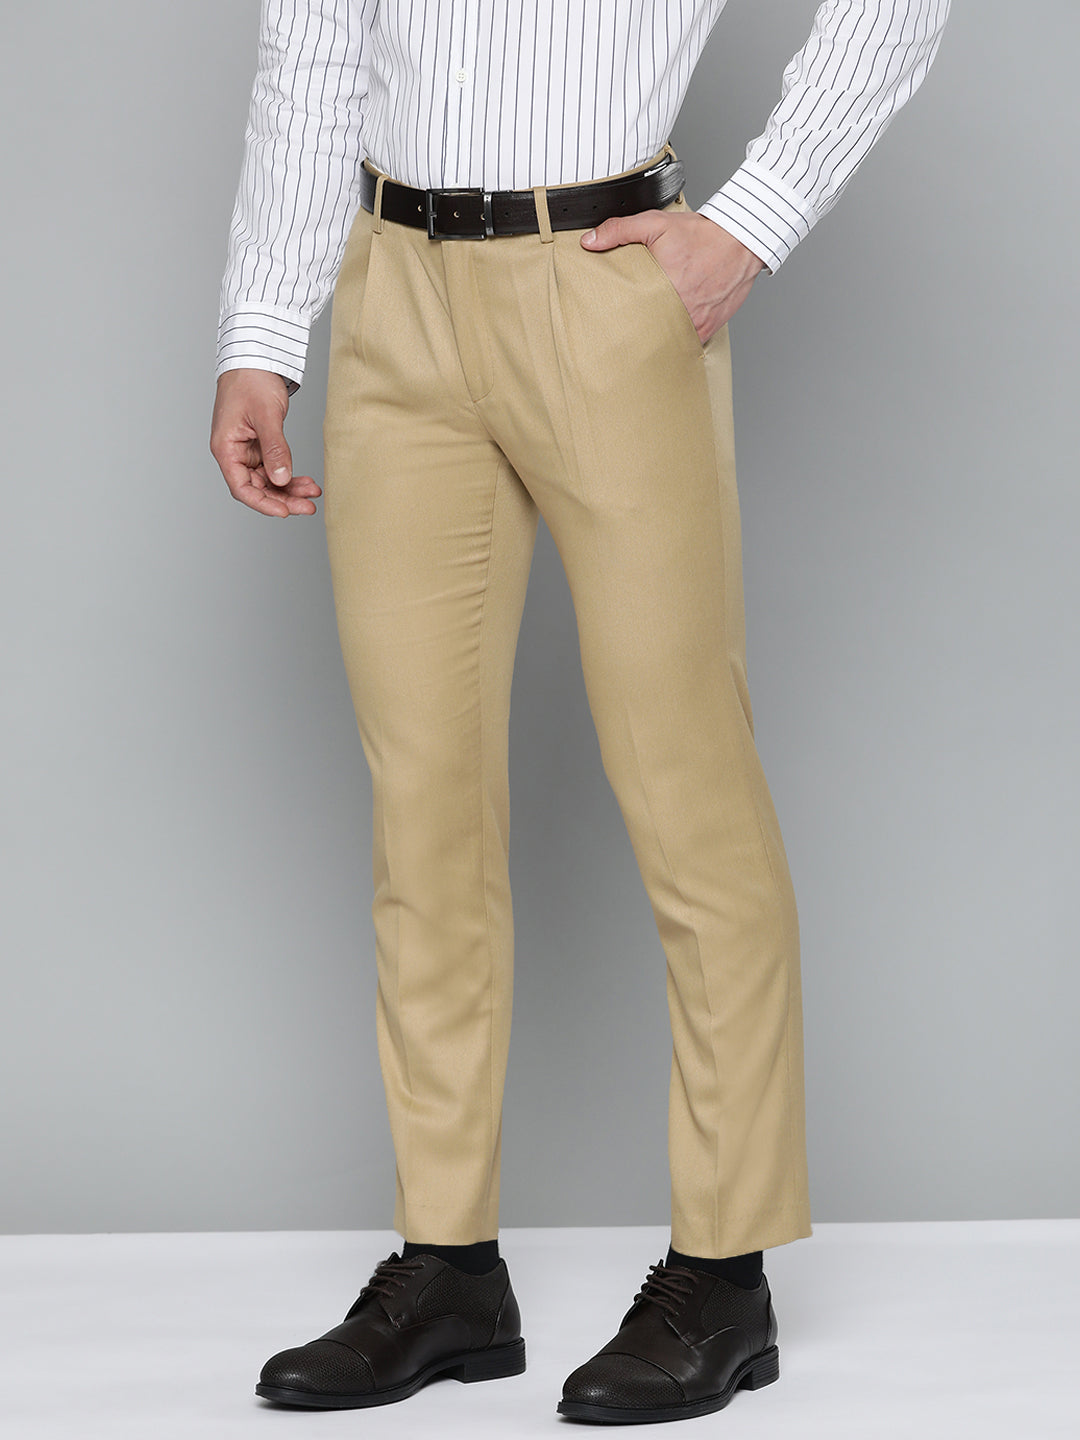 Grey Men Formal Trousers Canary London  Buy Grey Men Formal Trousers  Canary London online in India